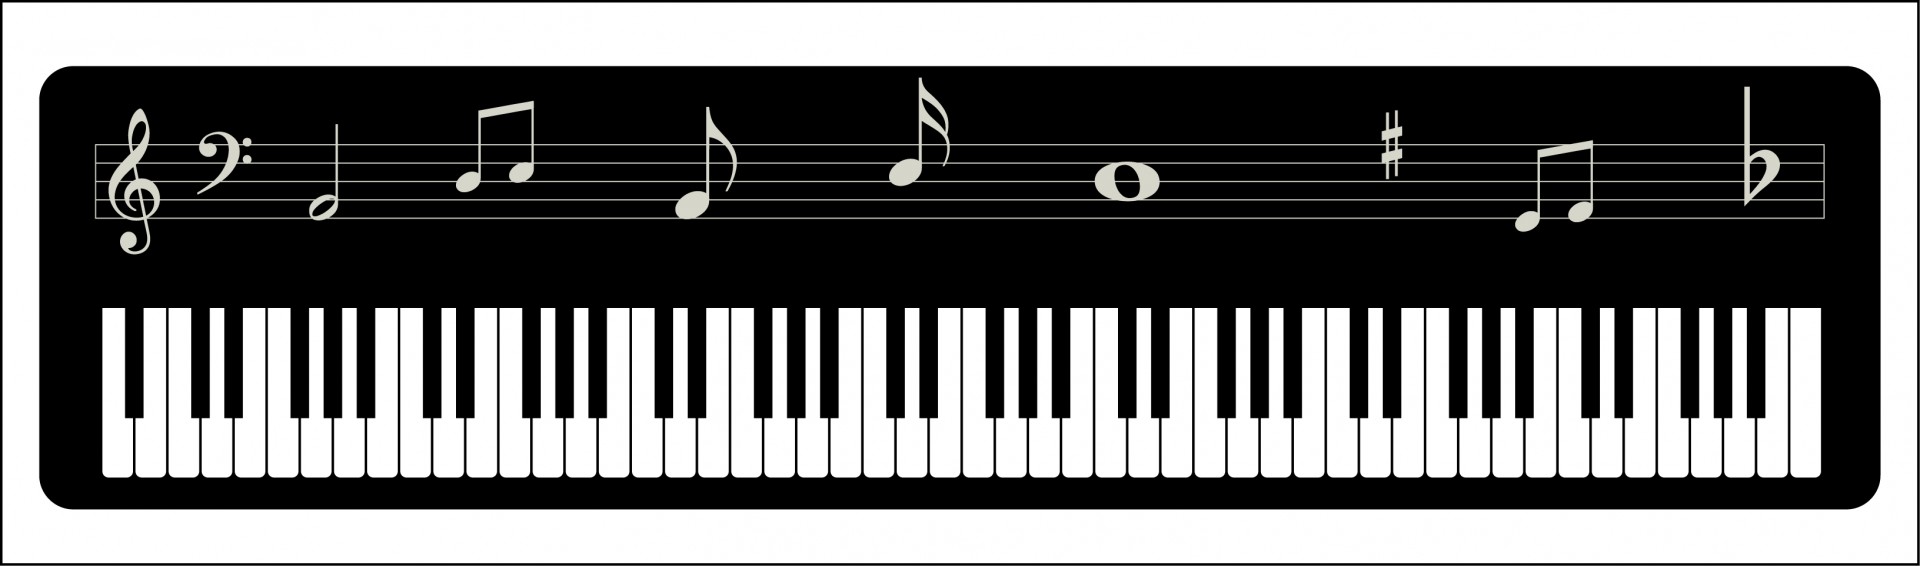 piano keyboard piano keyboard free photo